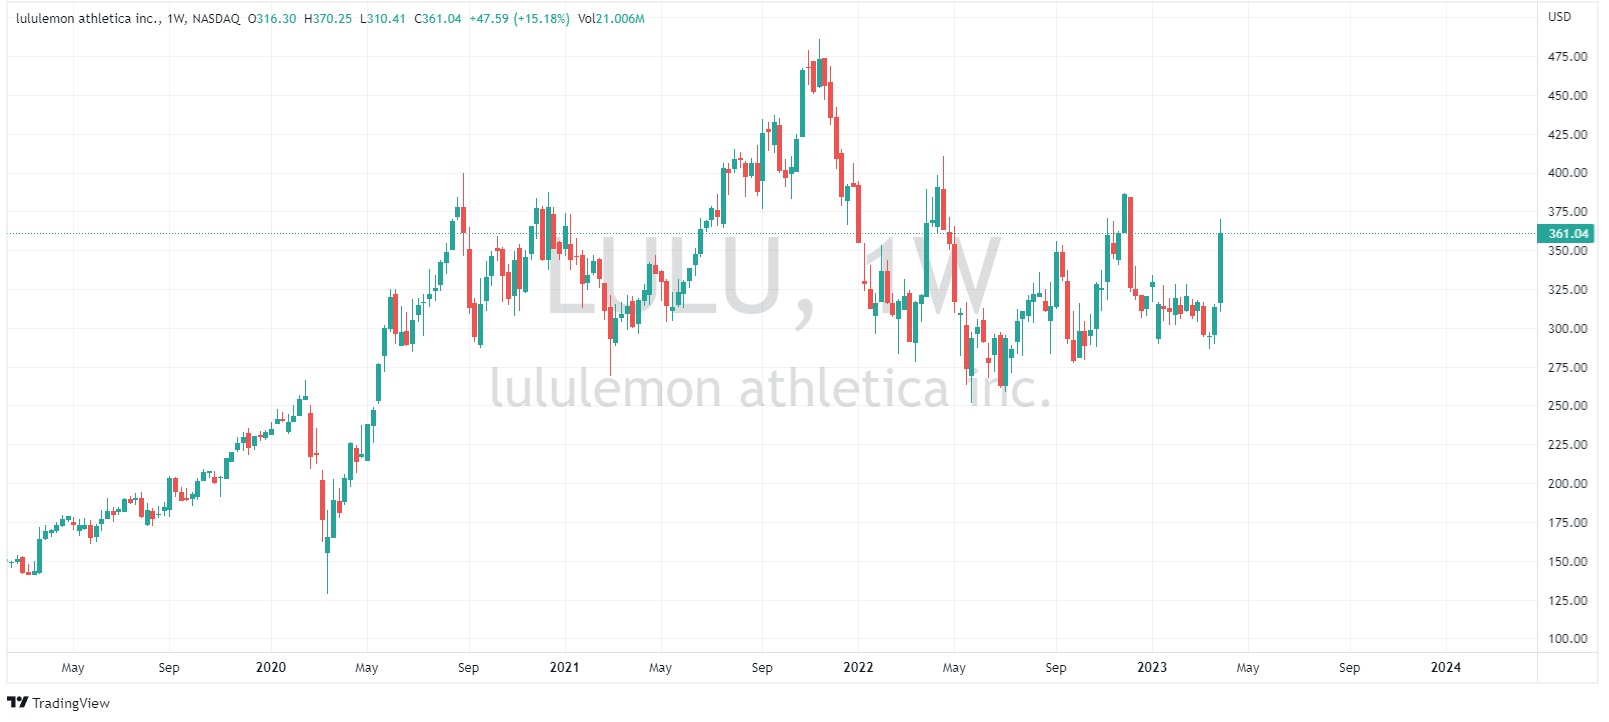 Lululemon Stock Price Per Share